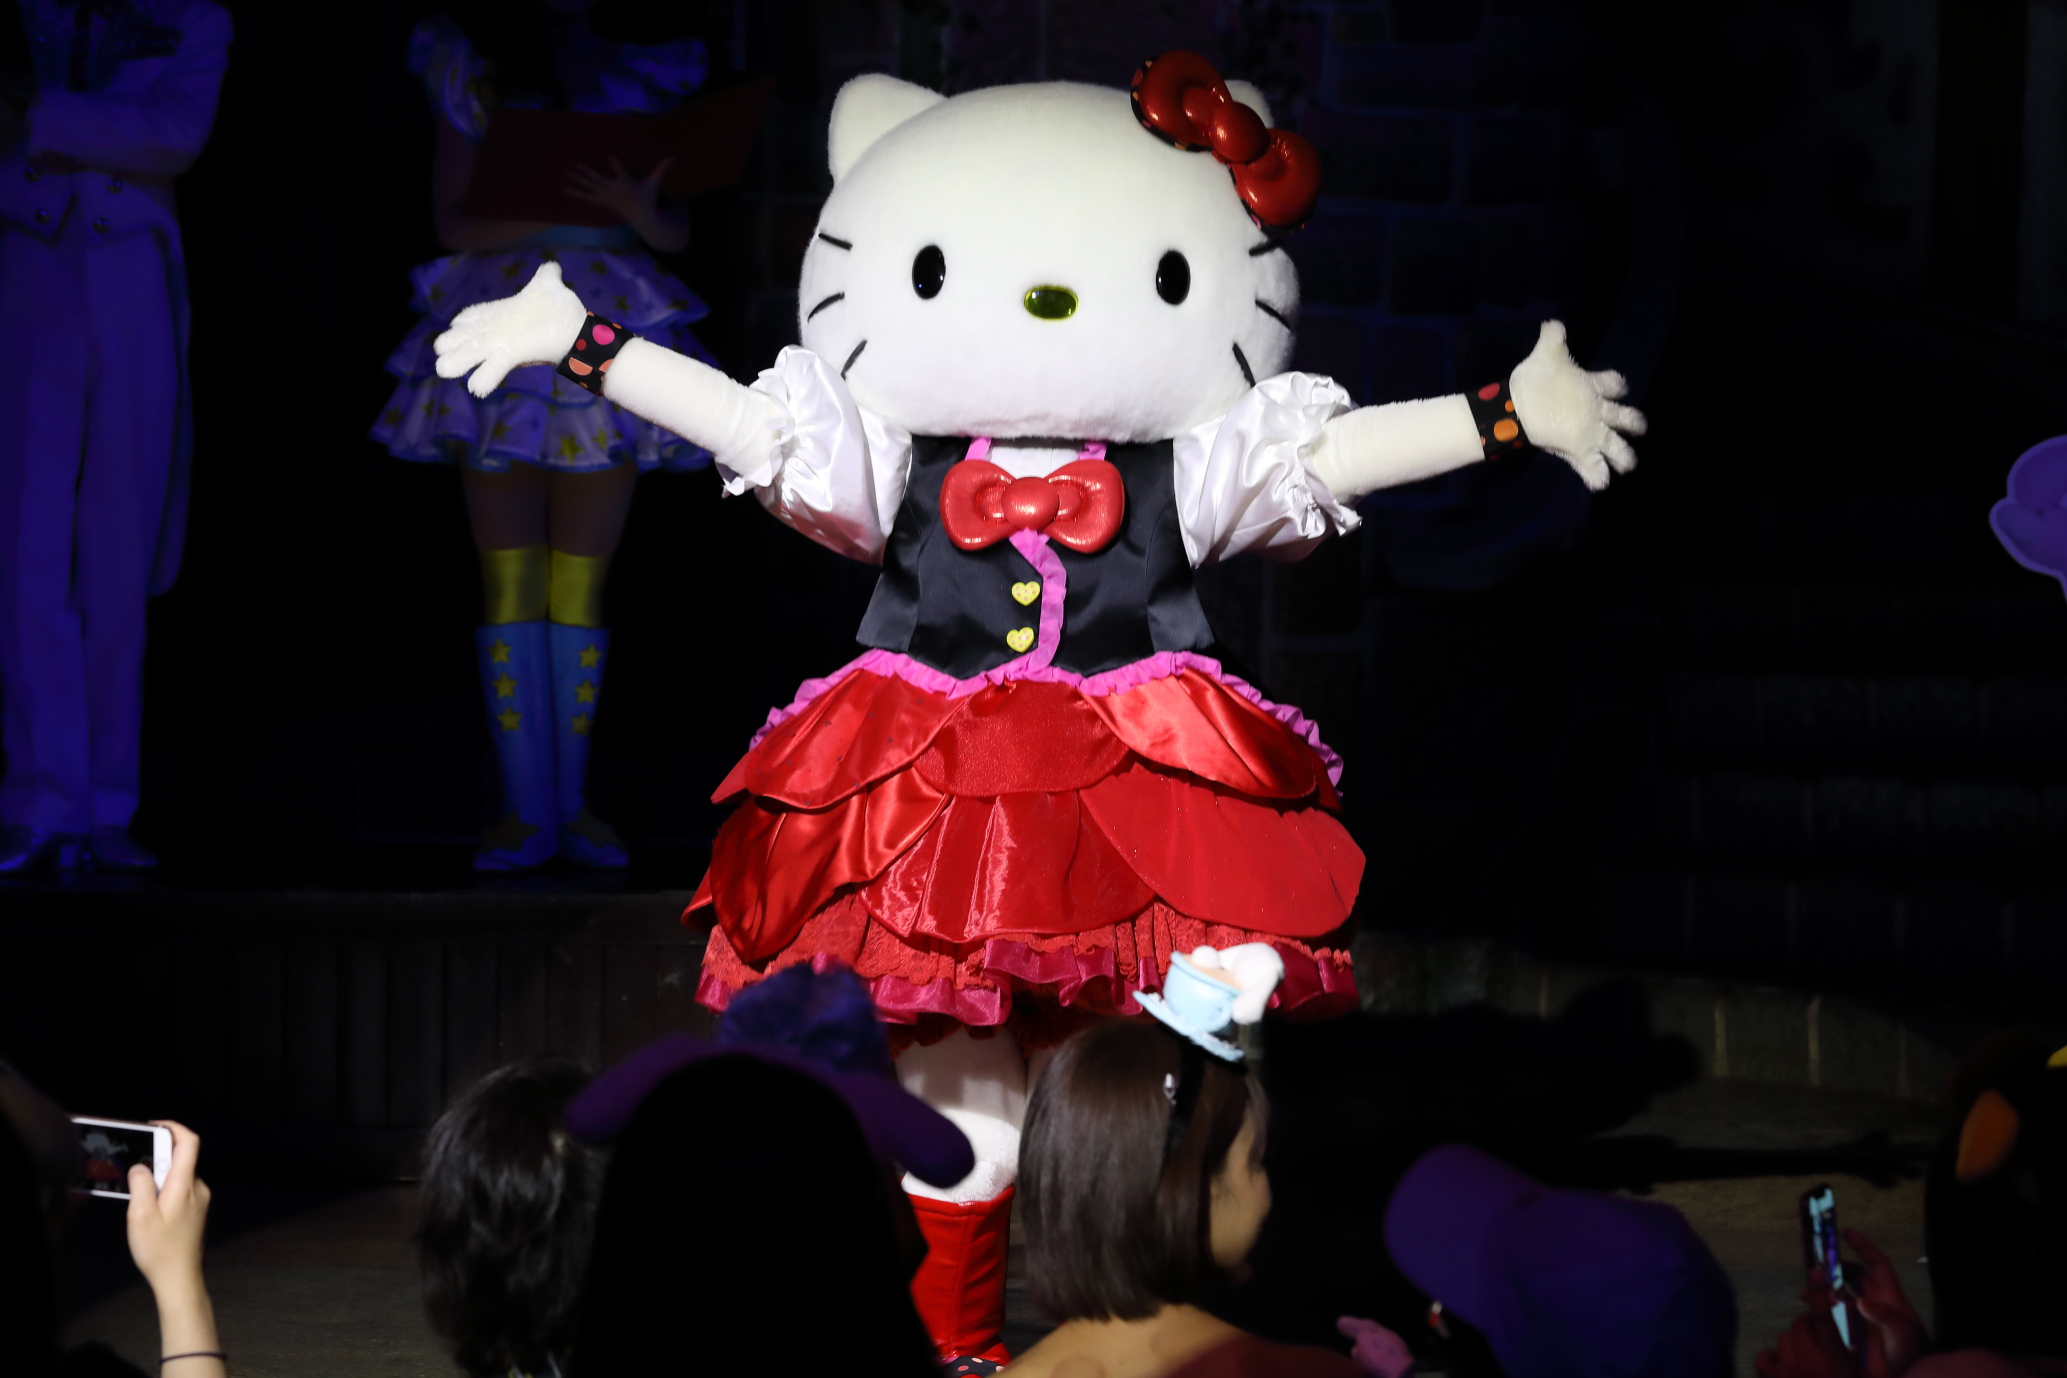 Sanrio's New Game 'Hello Kitty Island Adventure' Lands on Apple